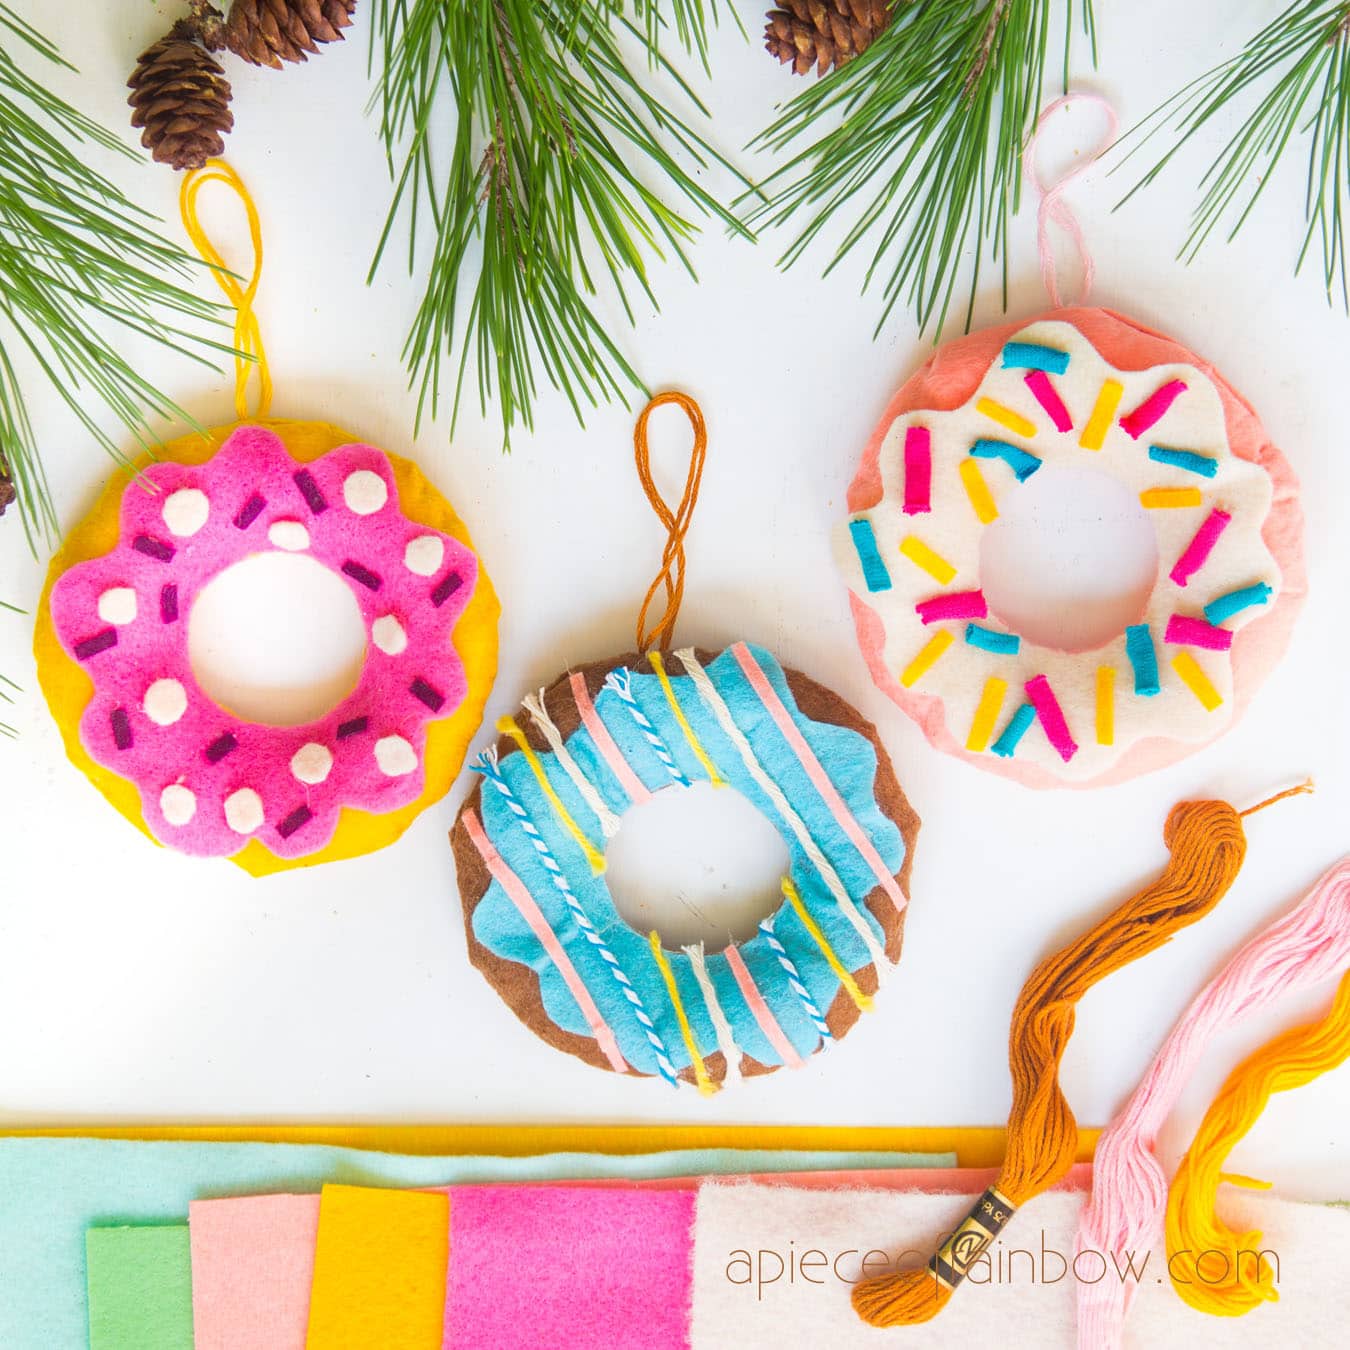 Anthropologie style handmade no-sew felt donut Christmas ornaments